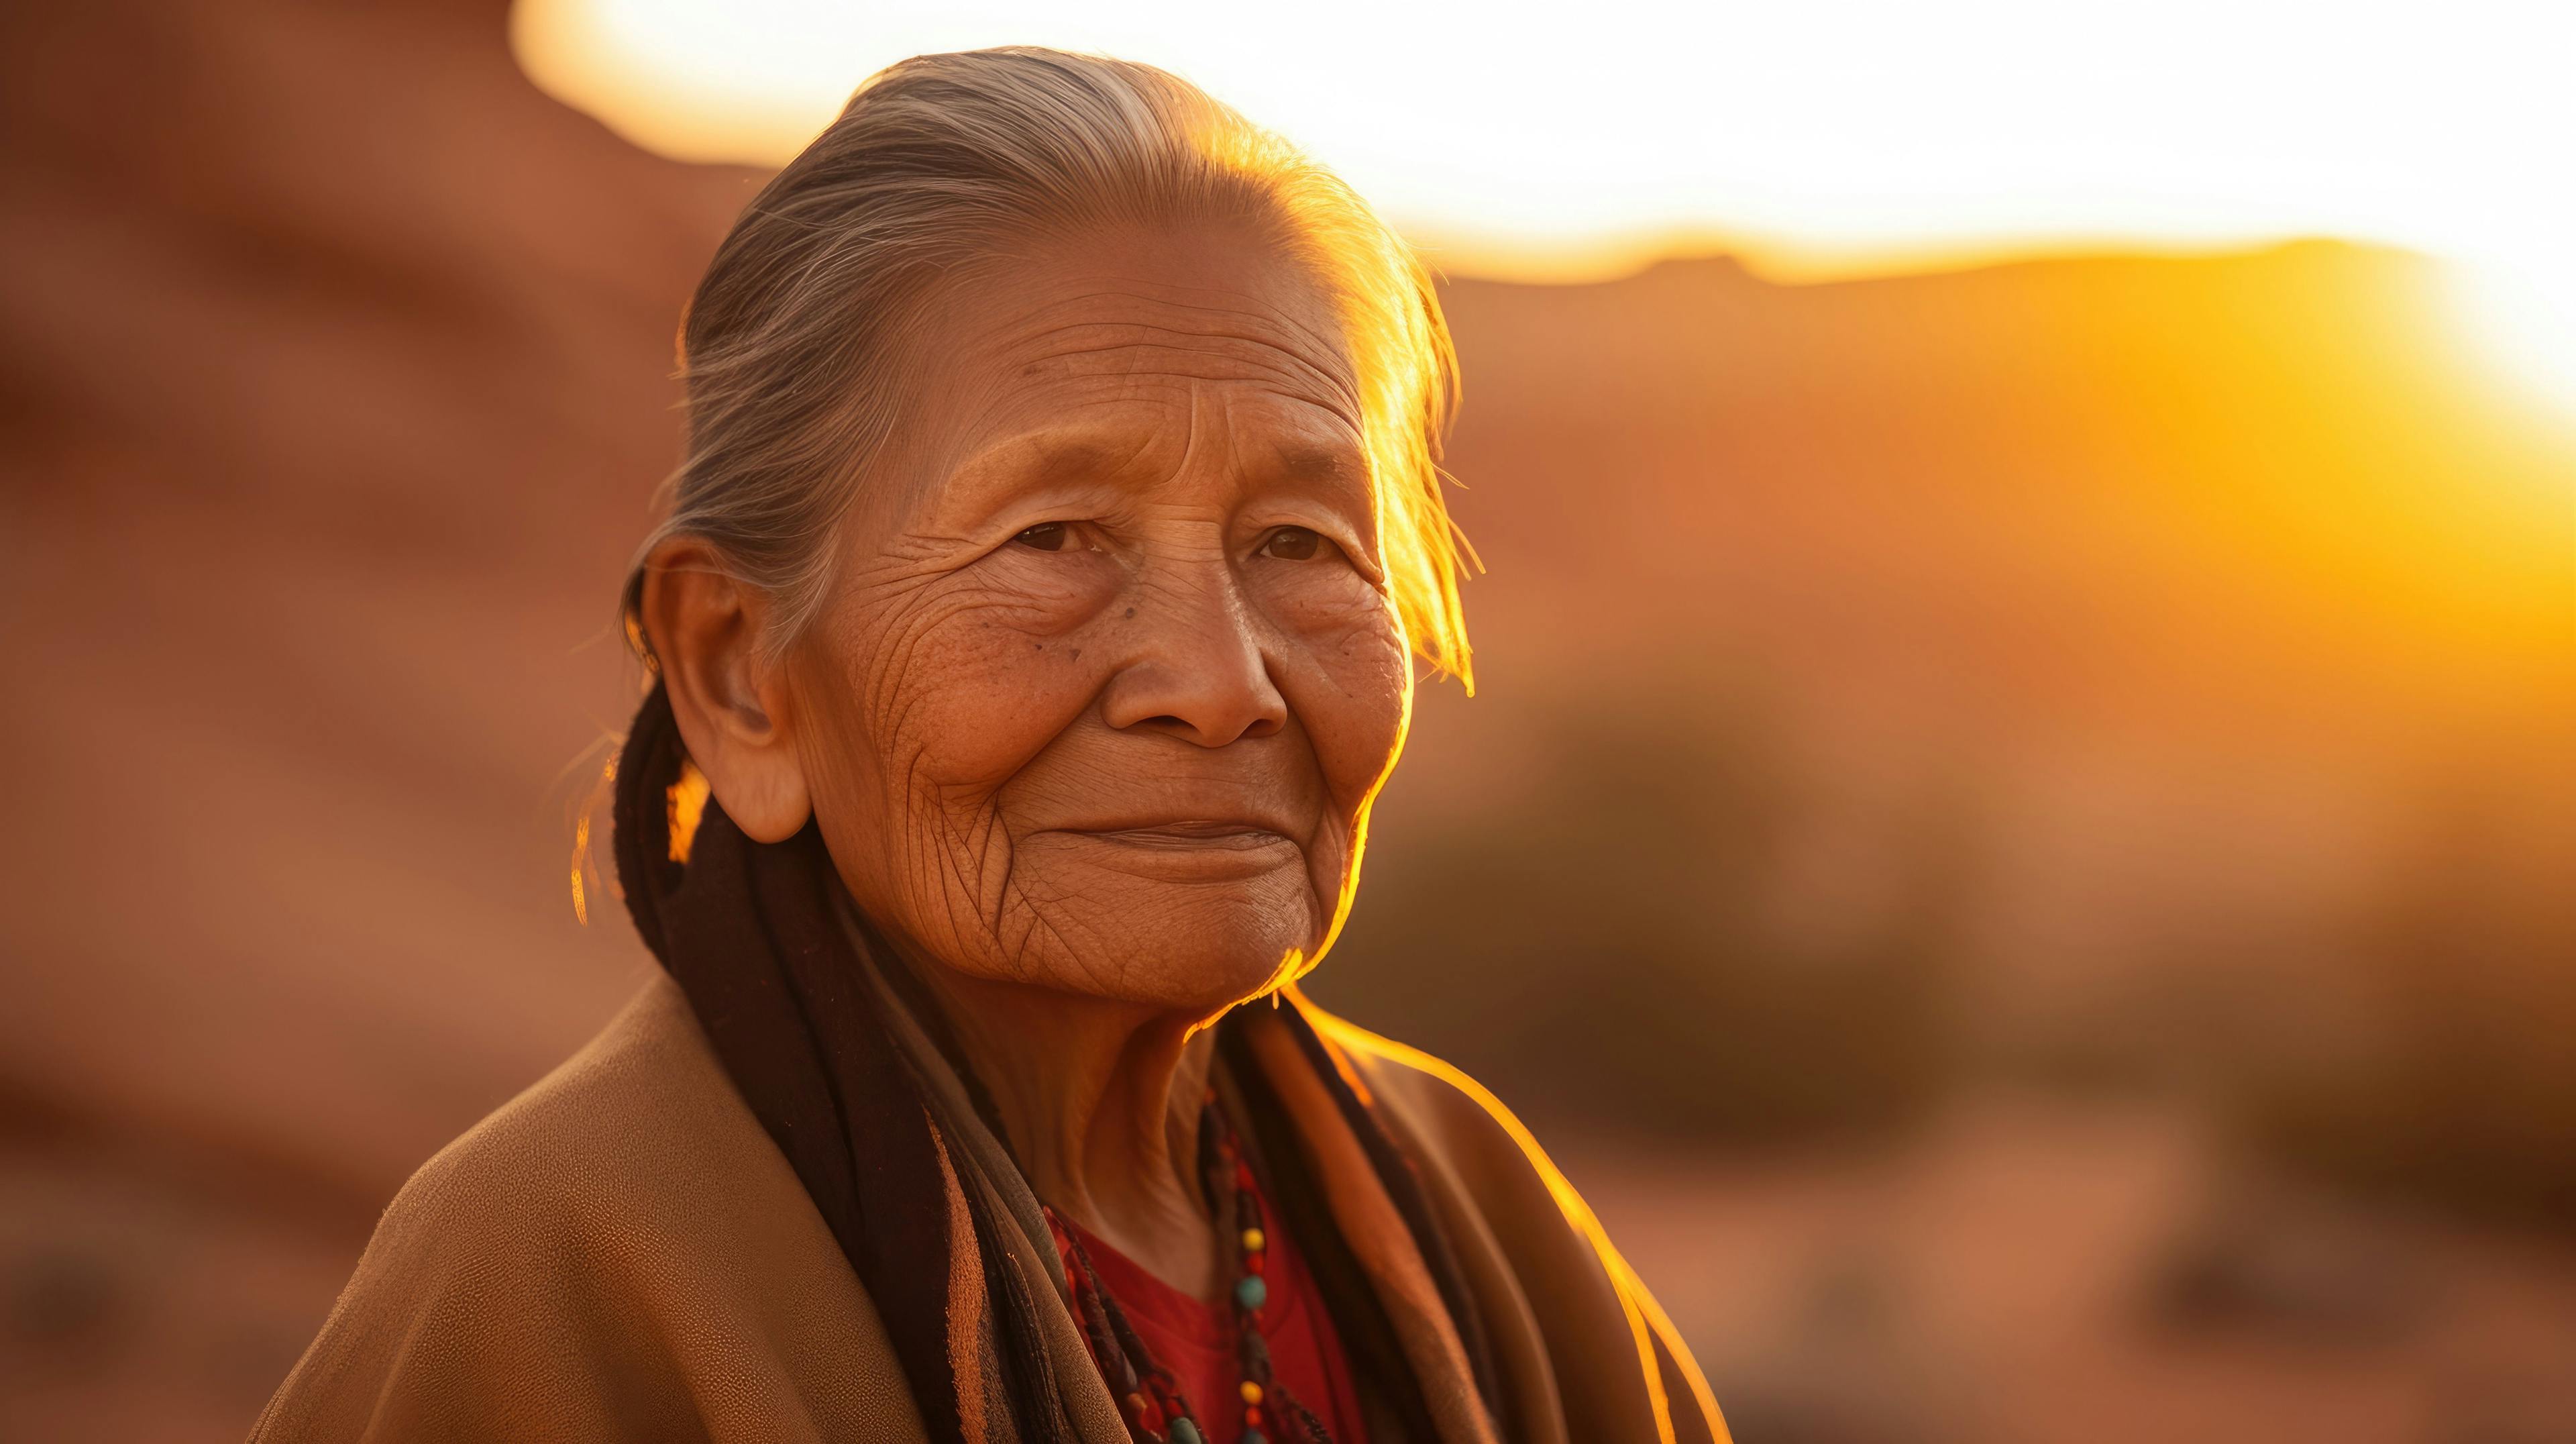 Portrait of Native American Women | image credit: Gary - stock.adobe.com